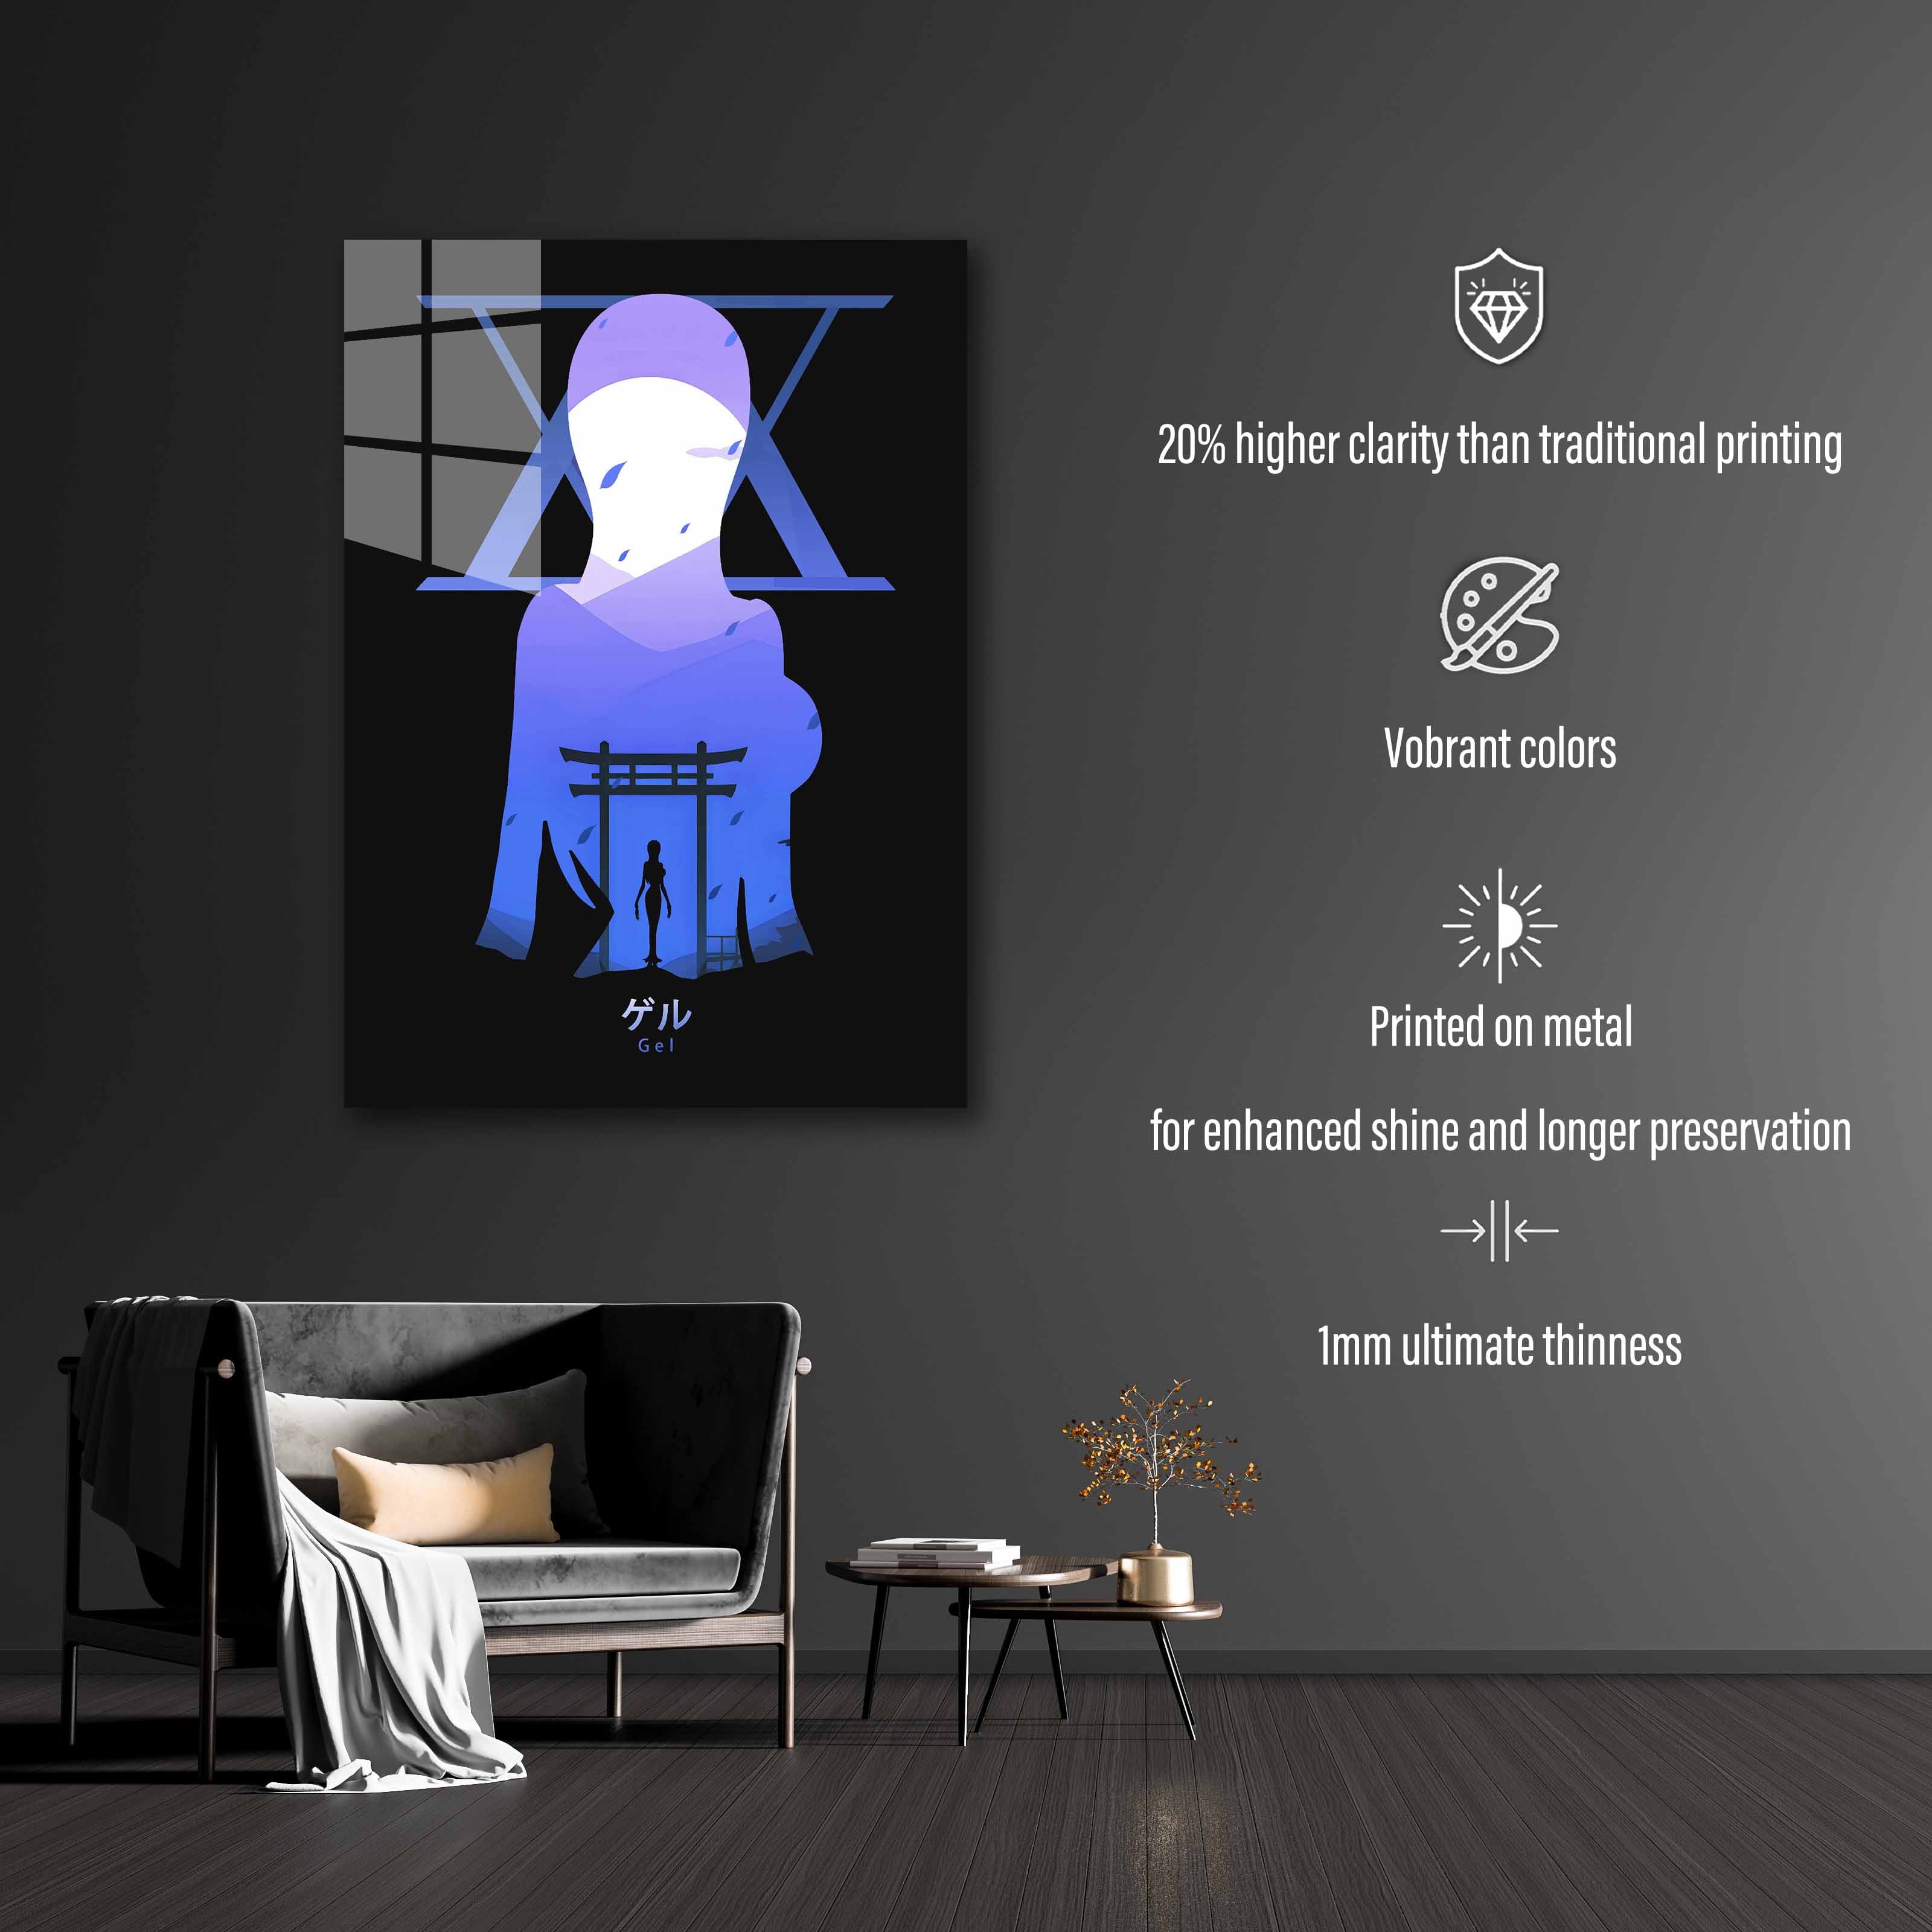 Gel Silhouette-designed by @Moqotib